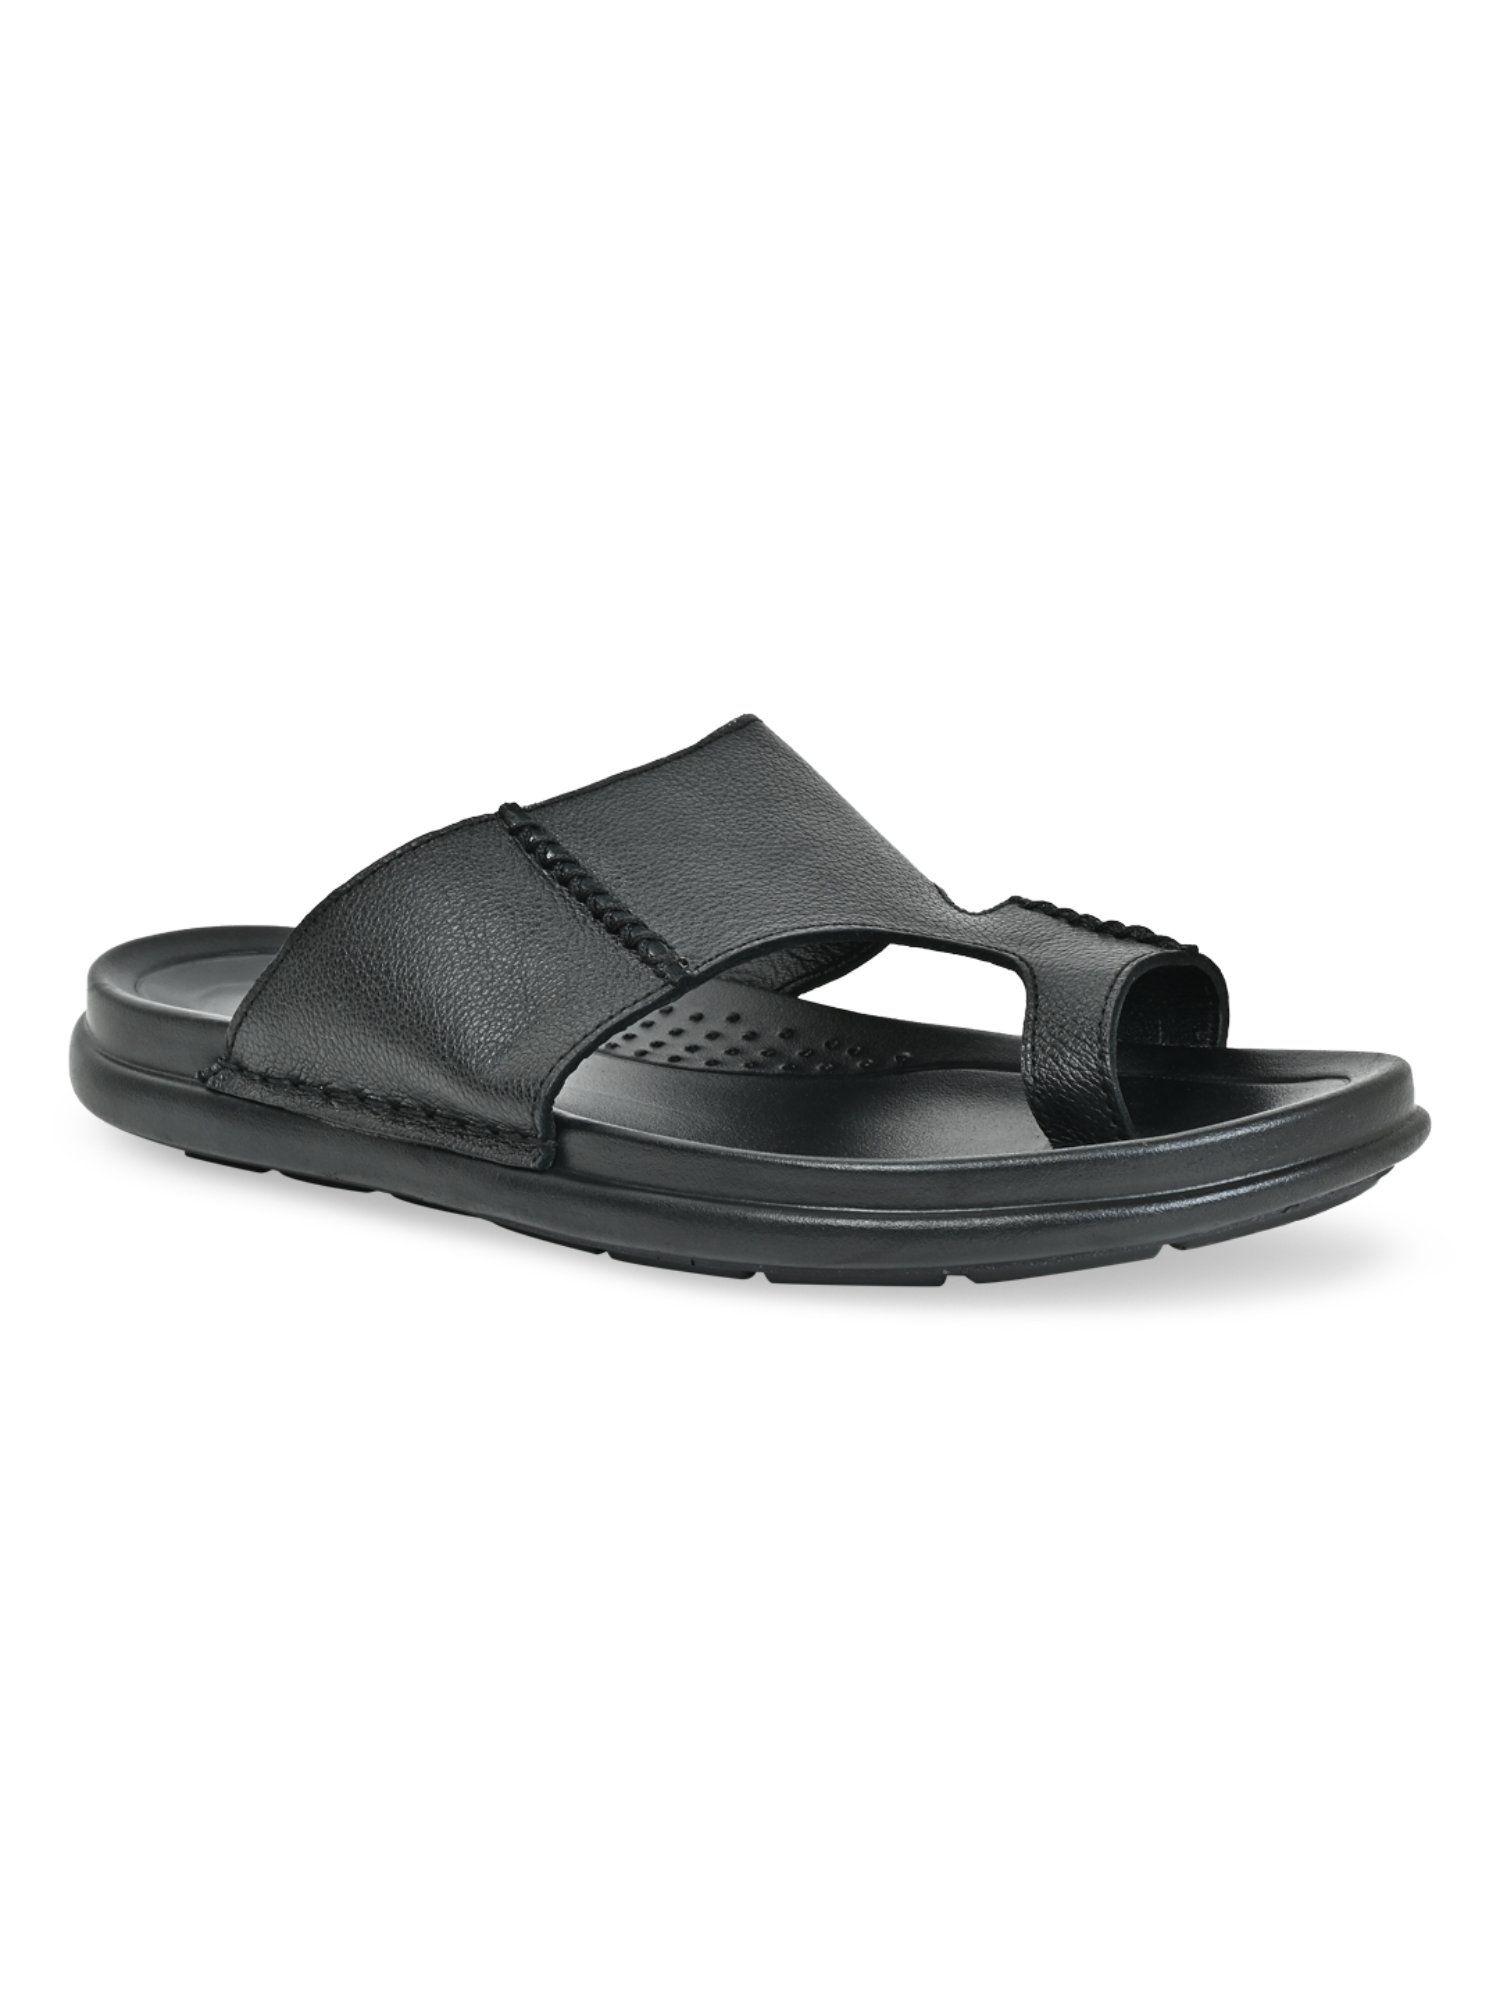 black-men-casual-leather-sandals